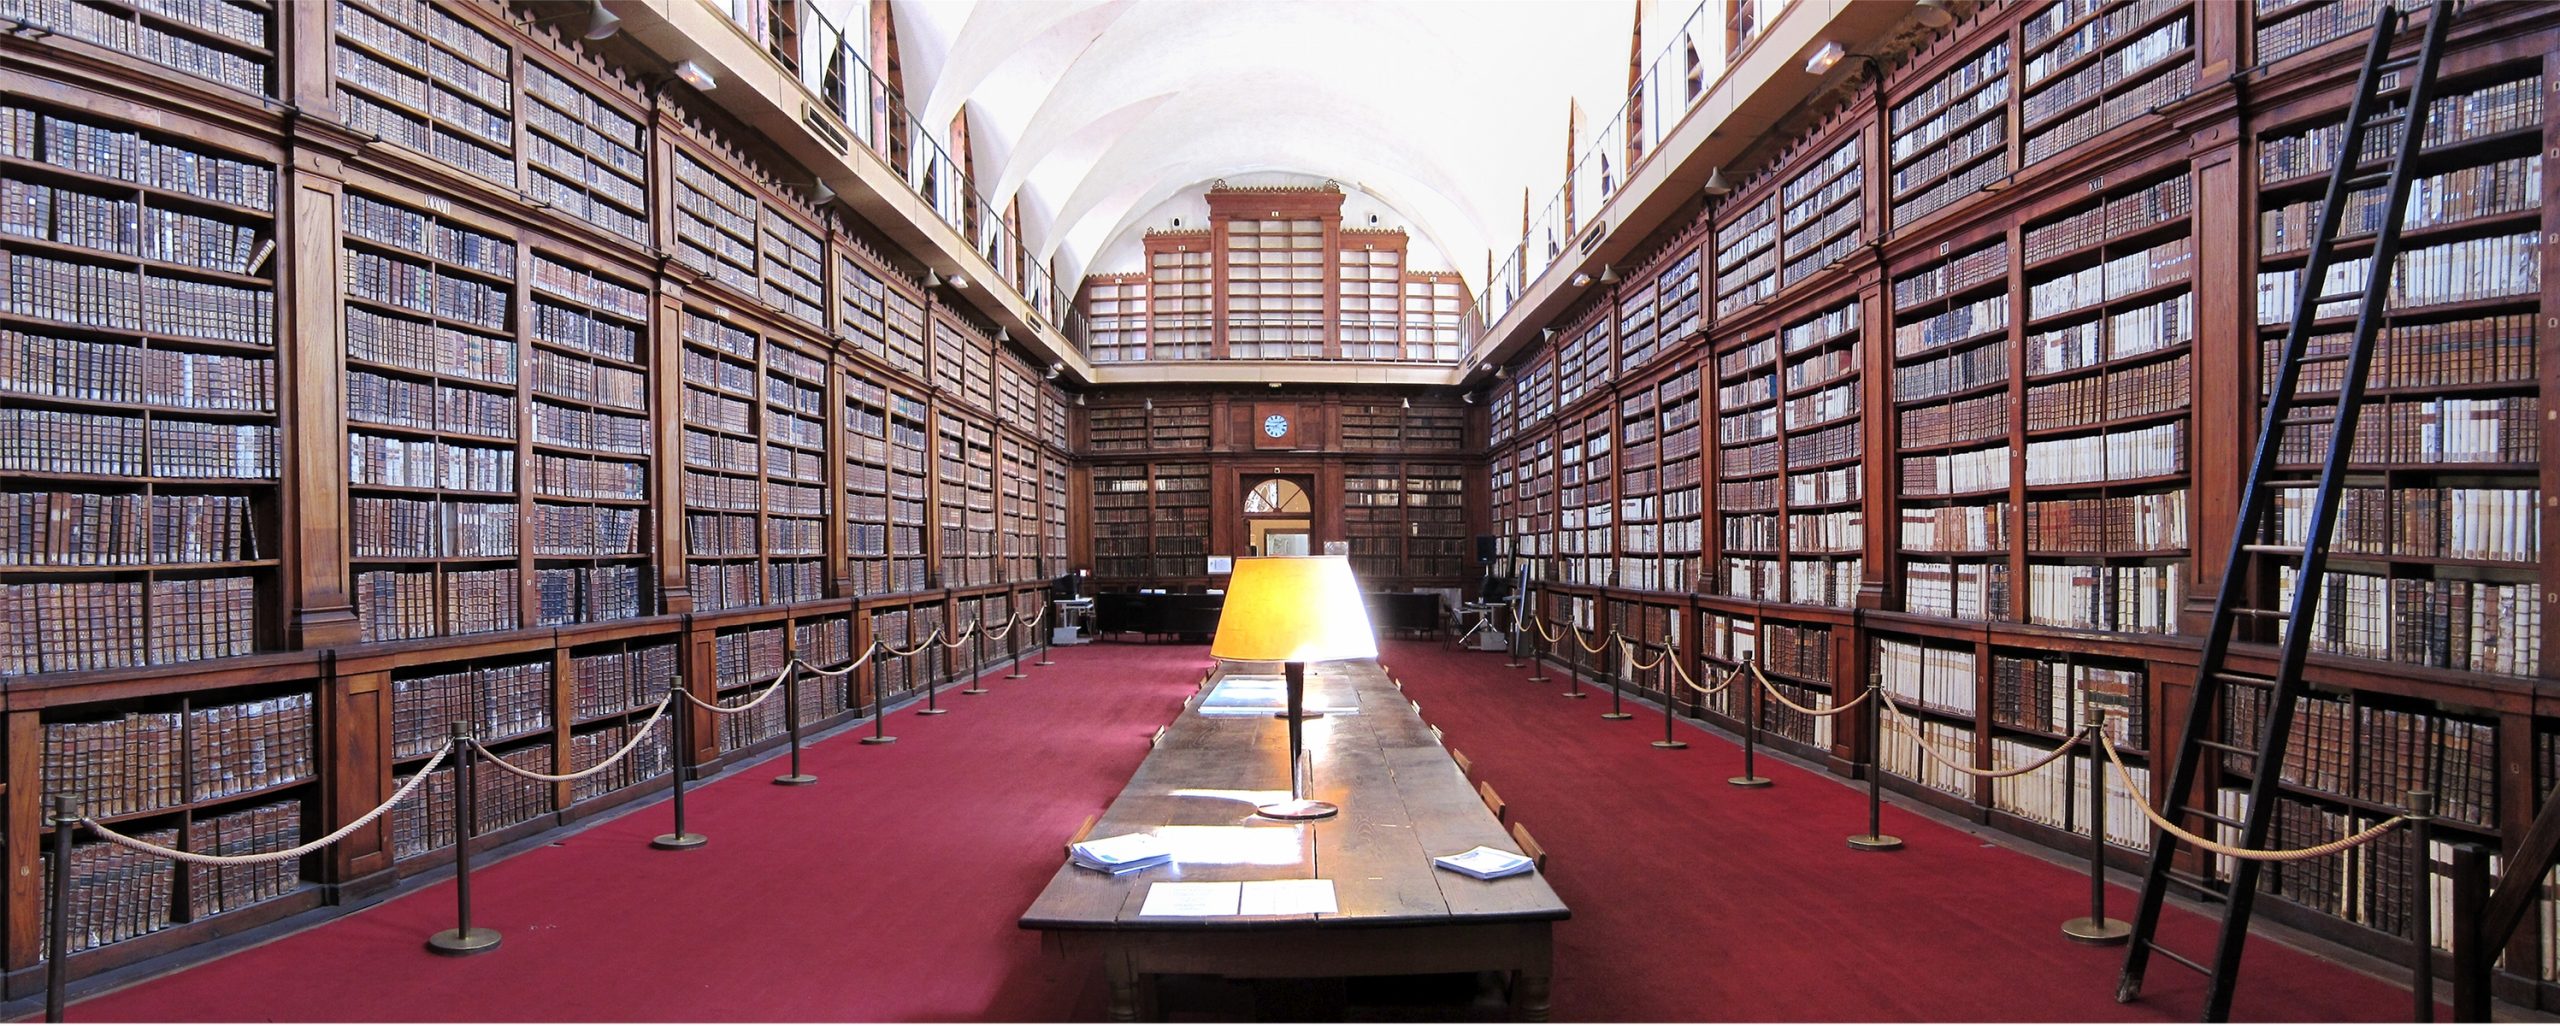 la bibliothèque